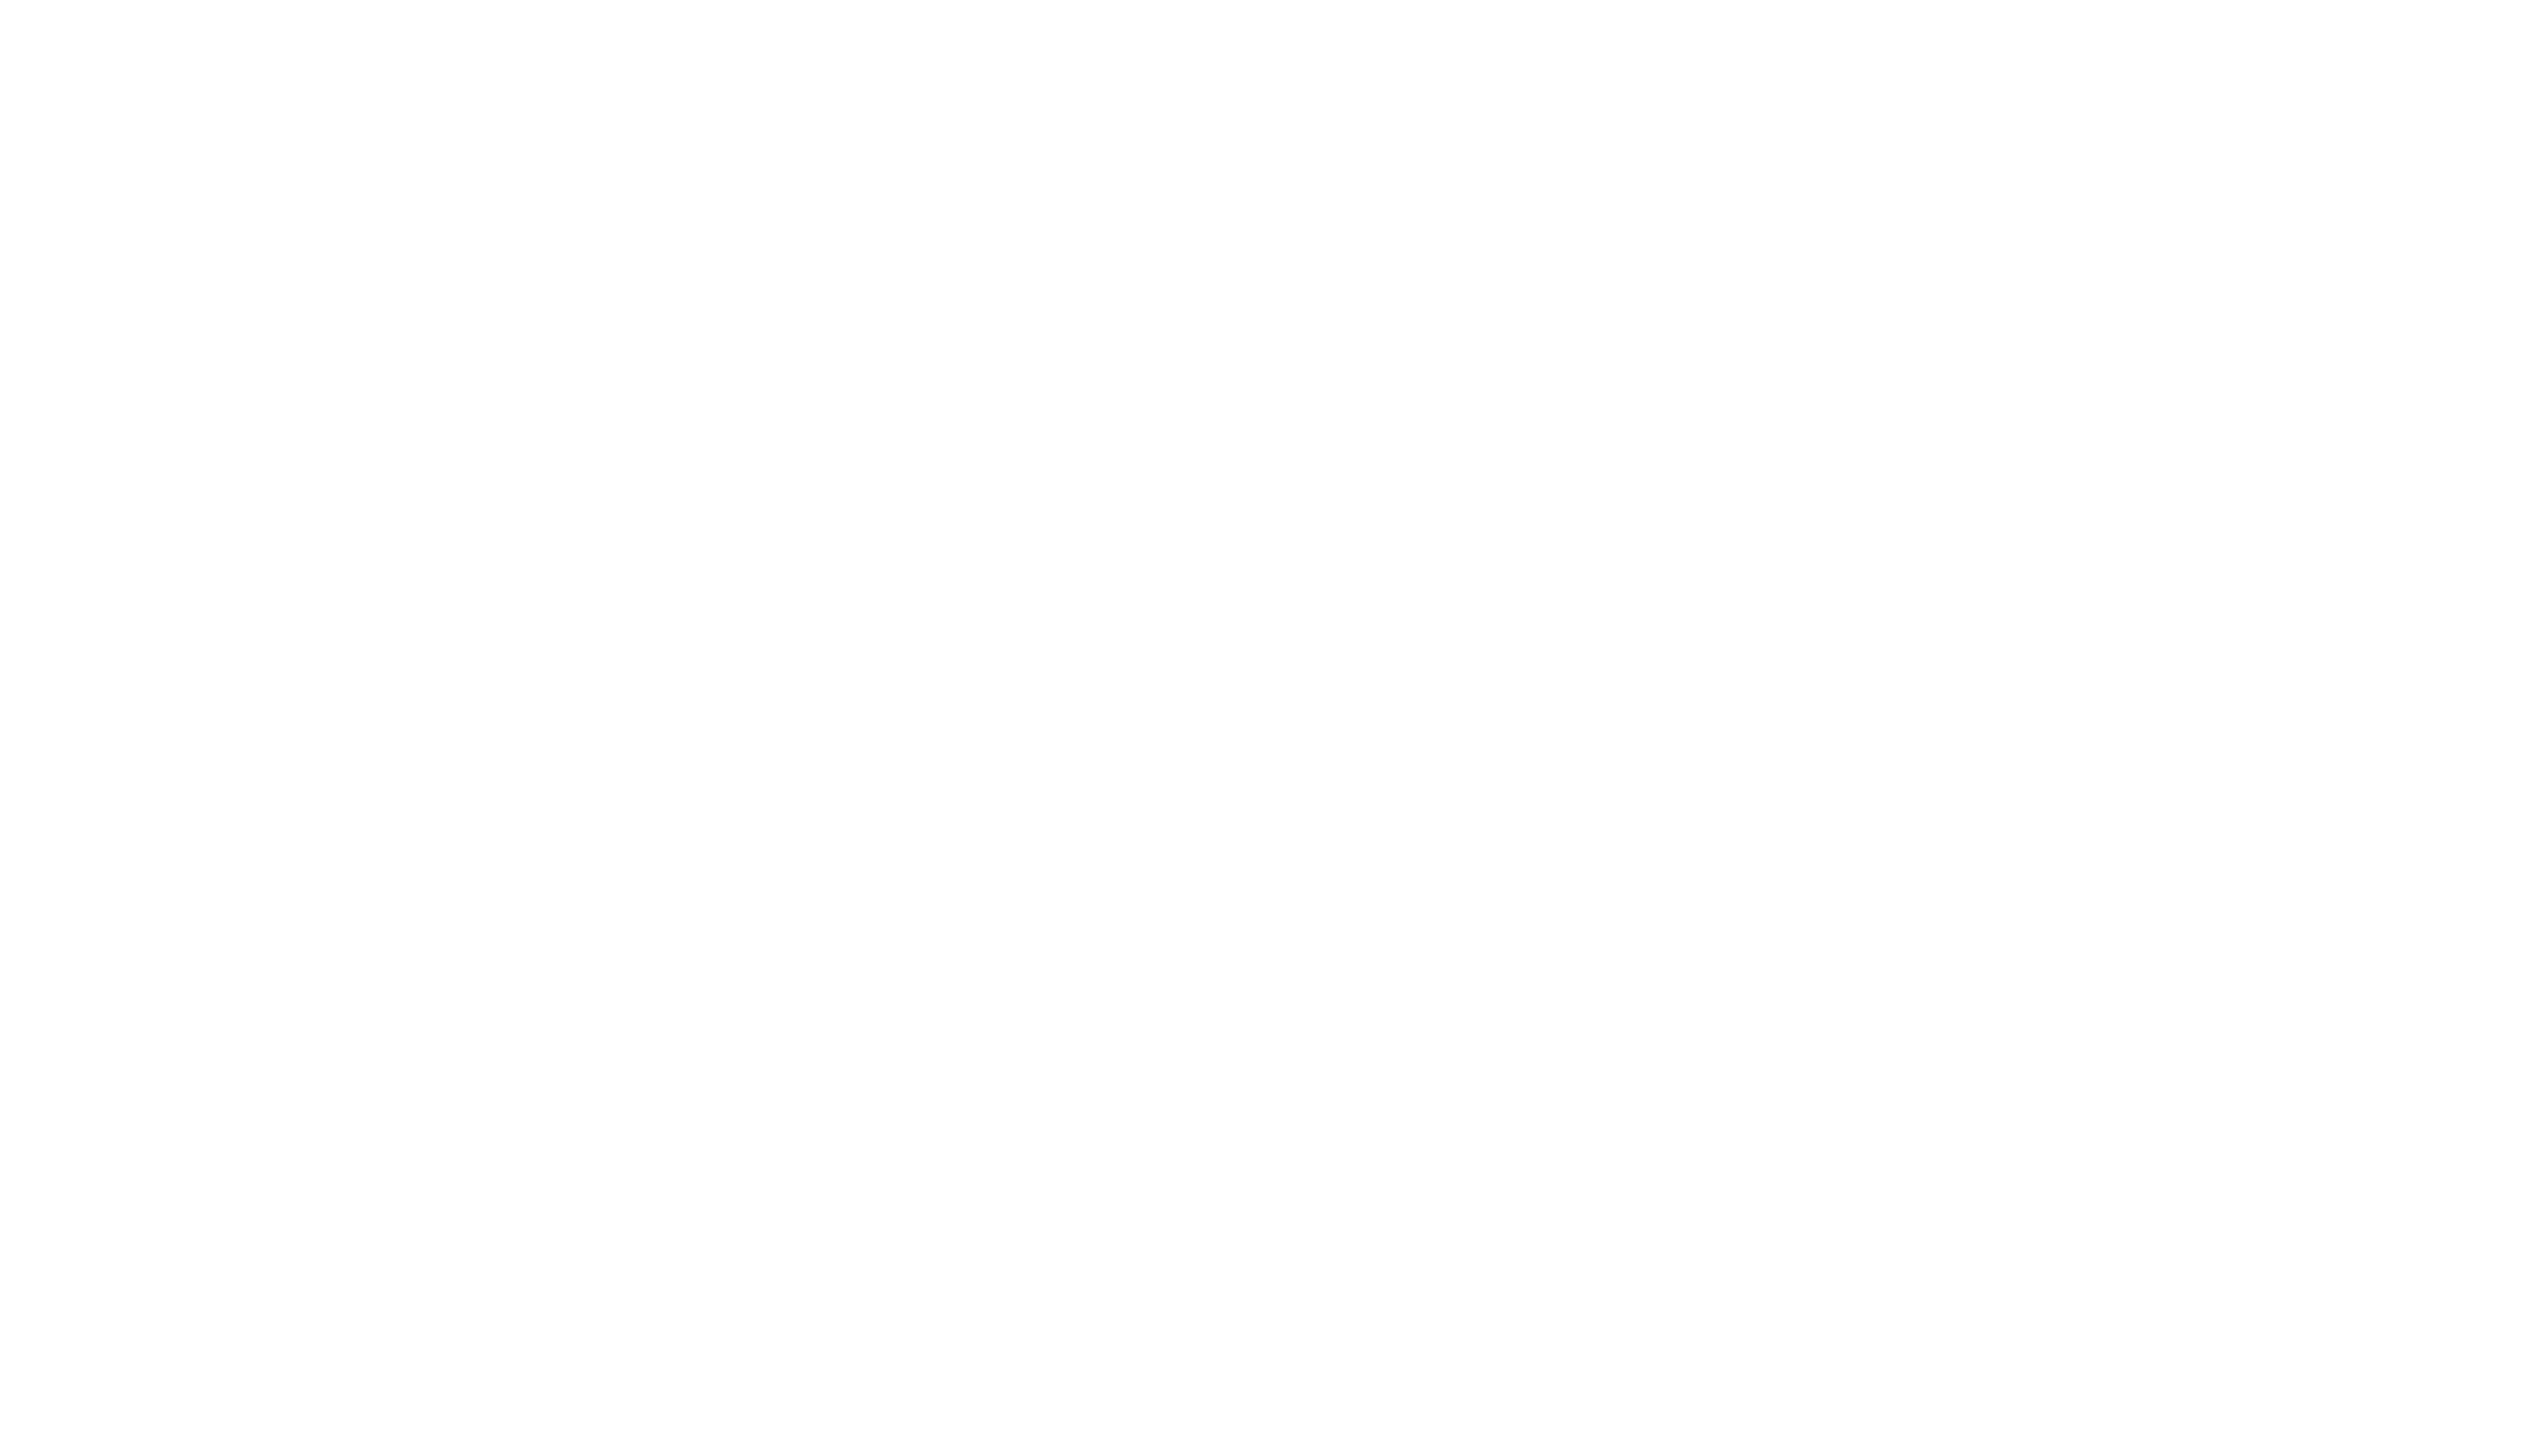 Xero Gold